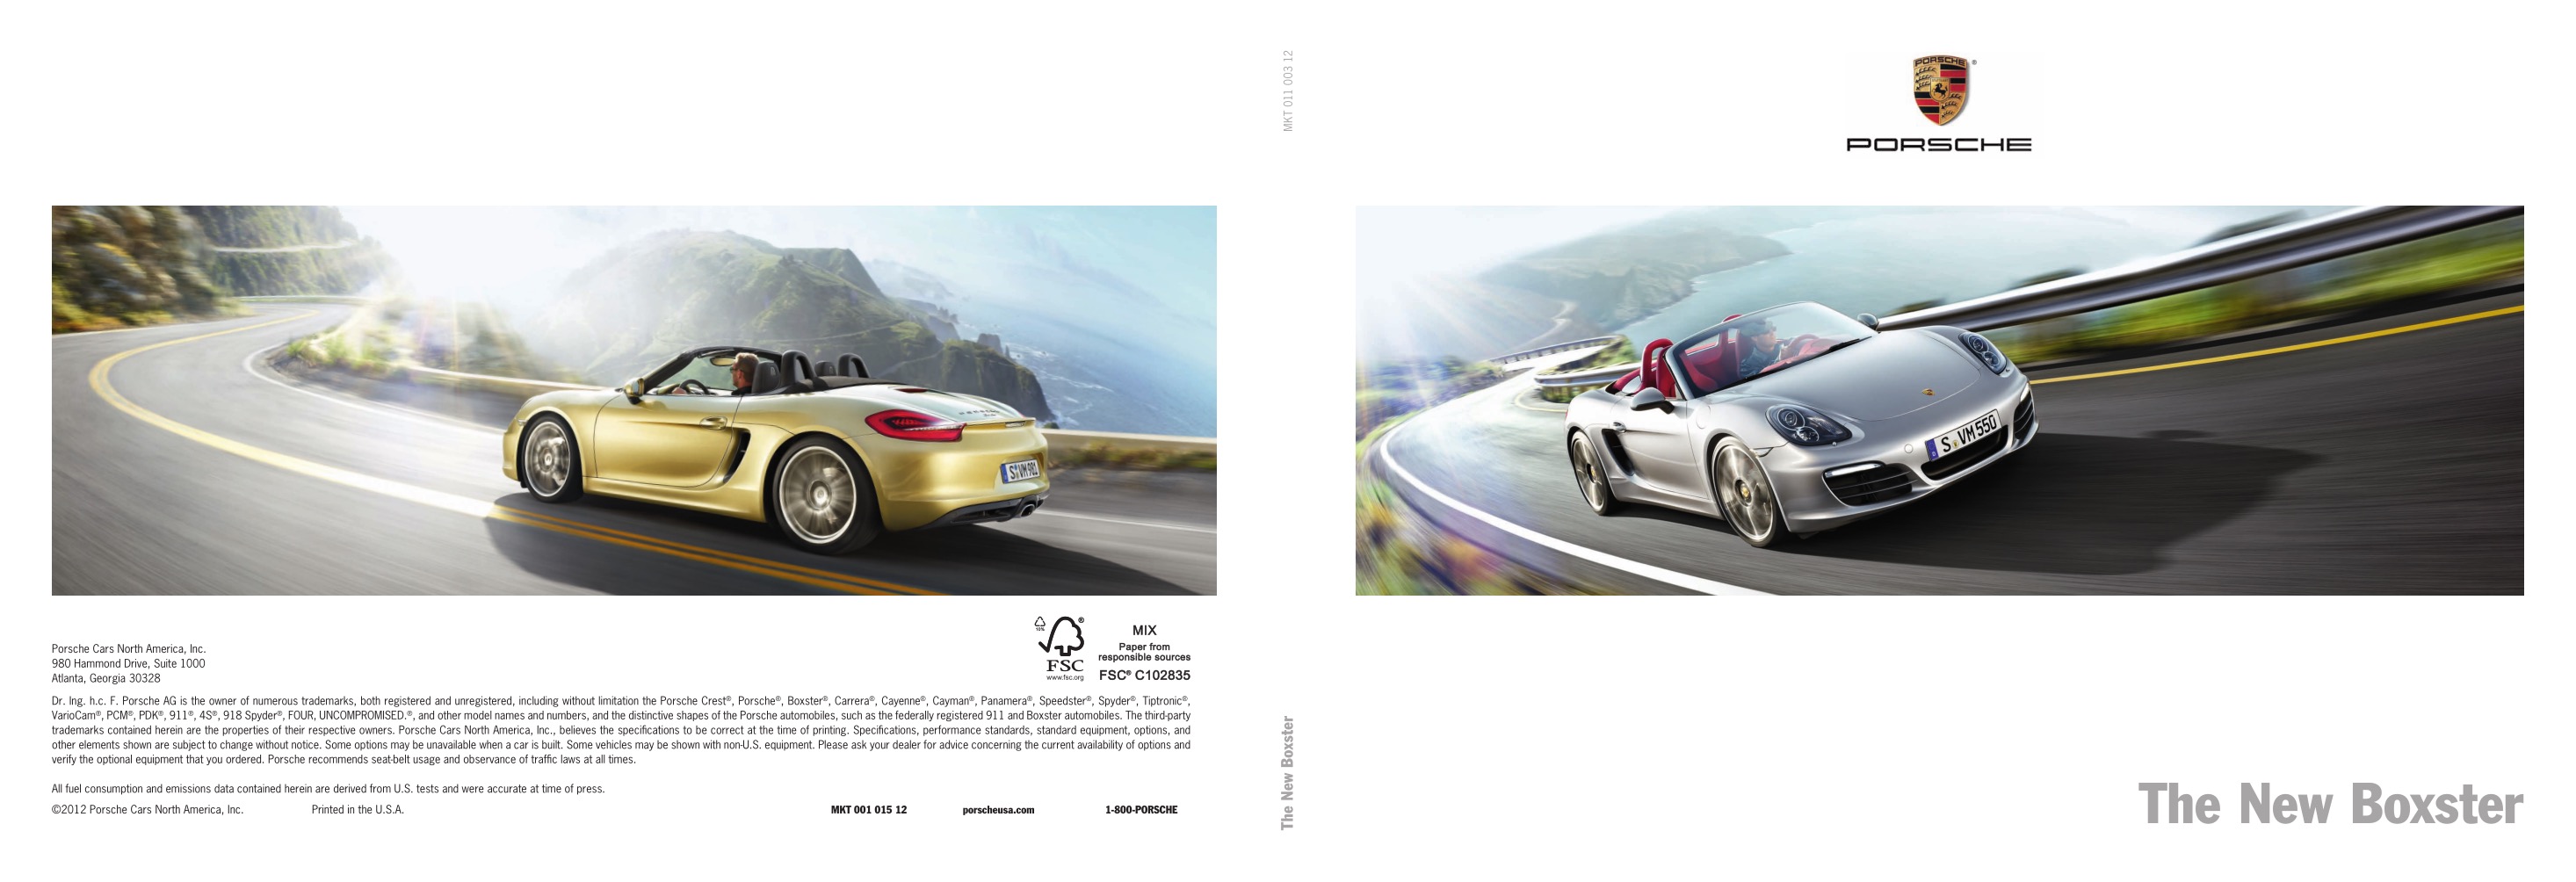 2013 Porsche Boxster Brochure Page 5